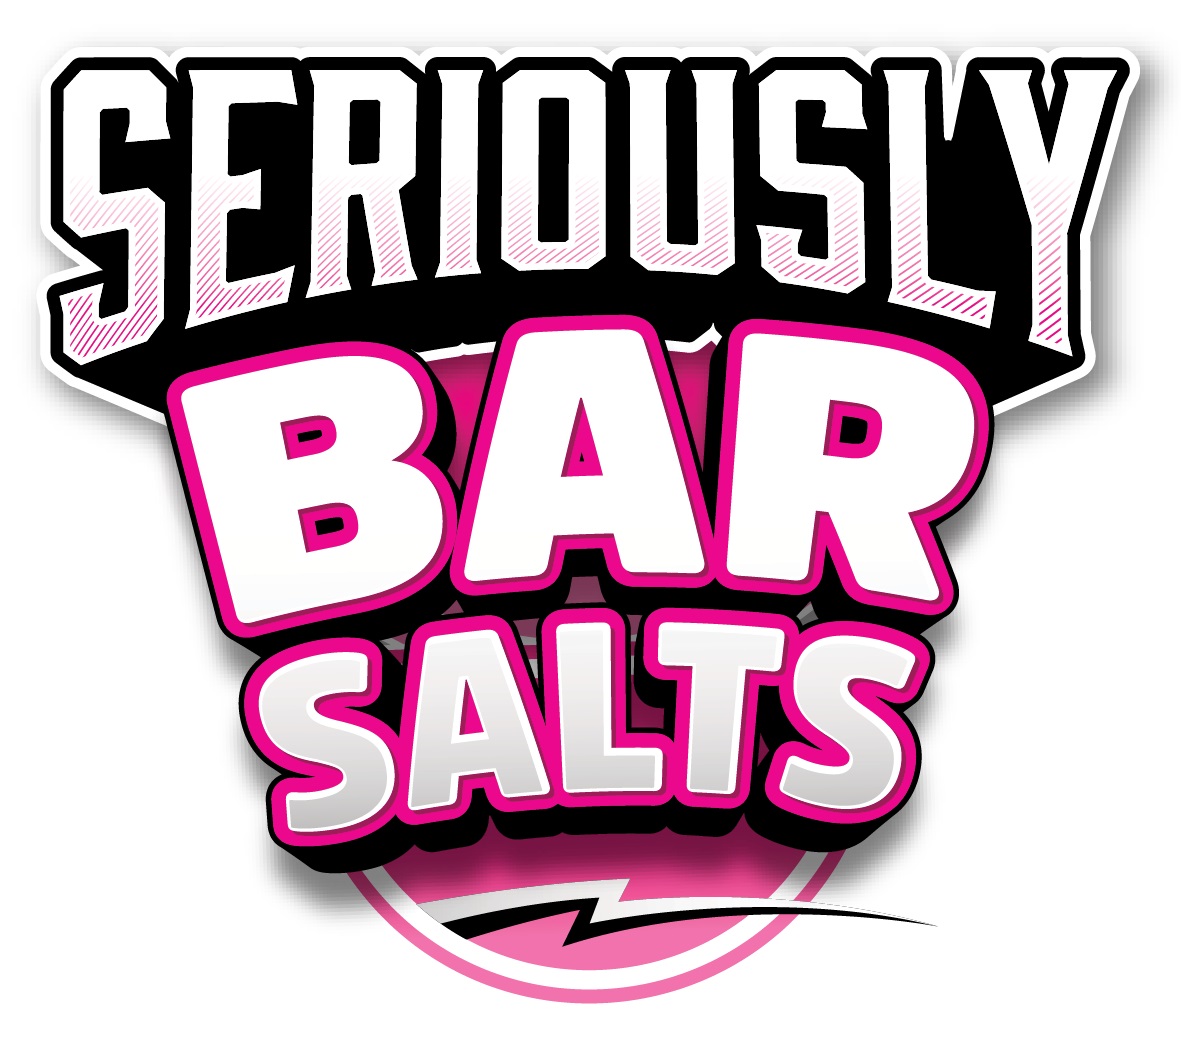 Seriously bar salts logo uk